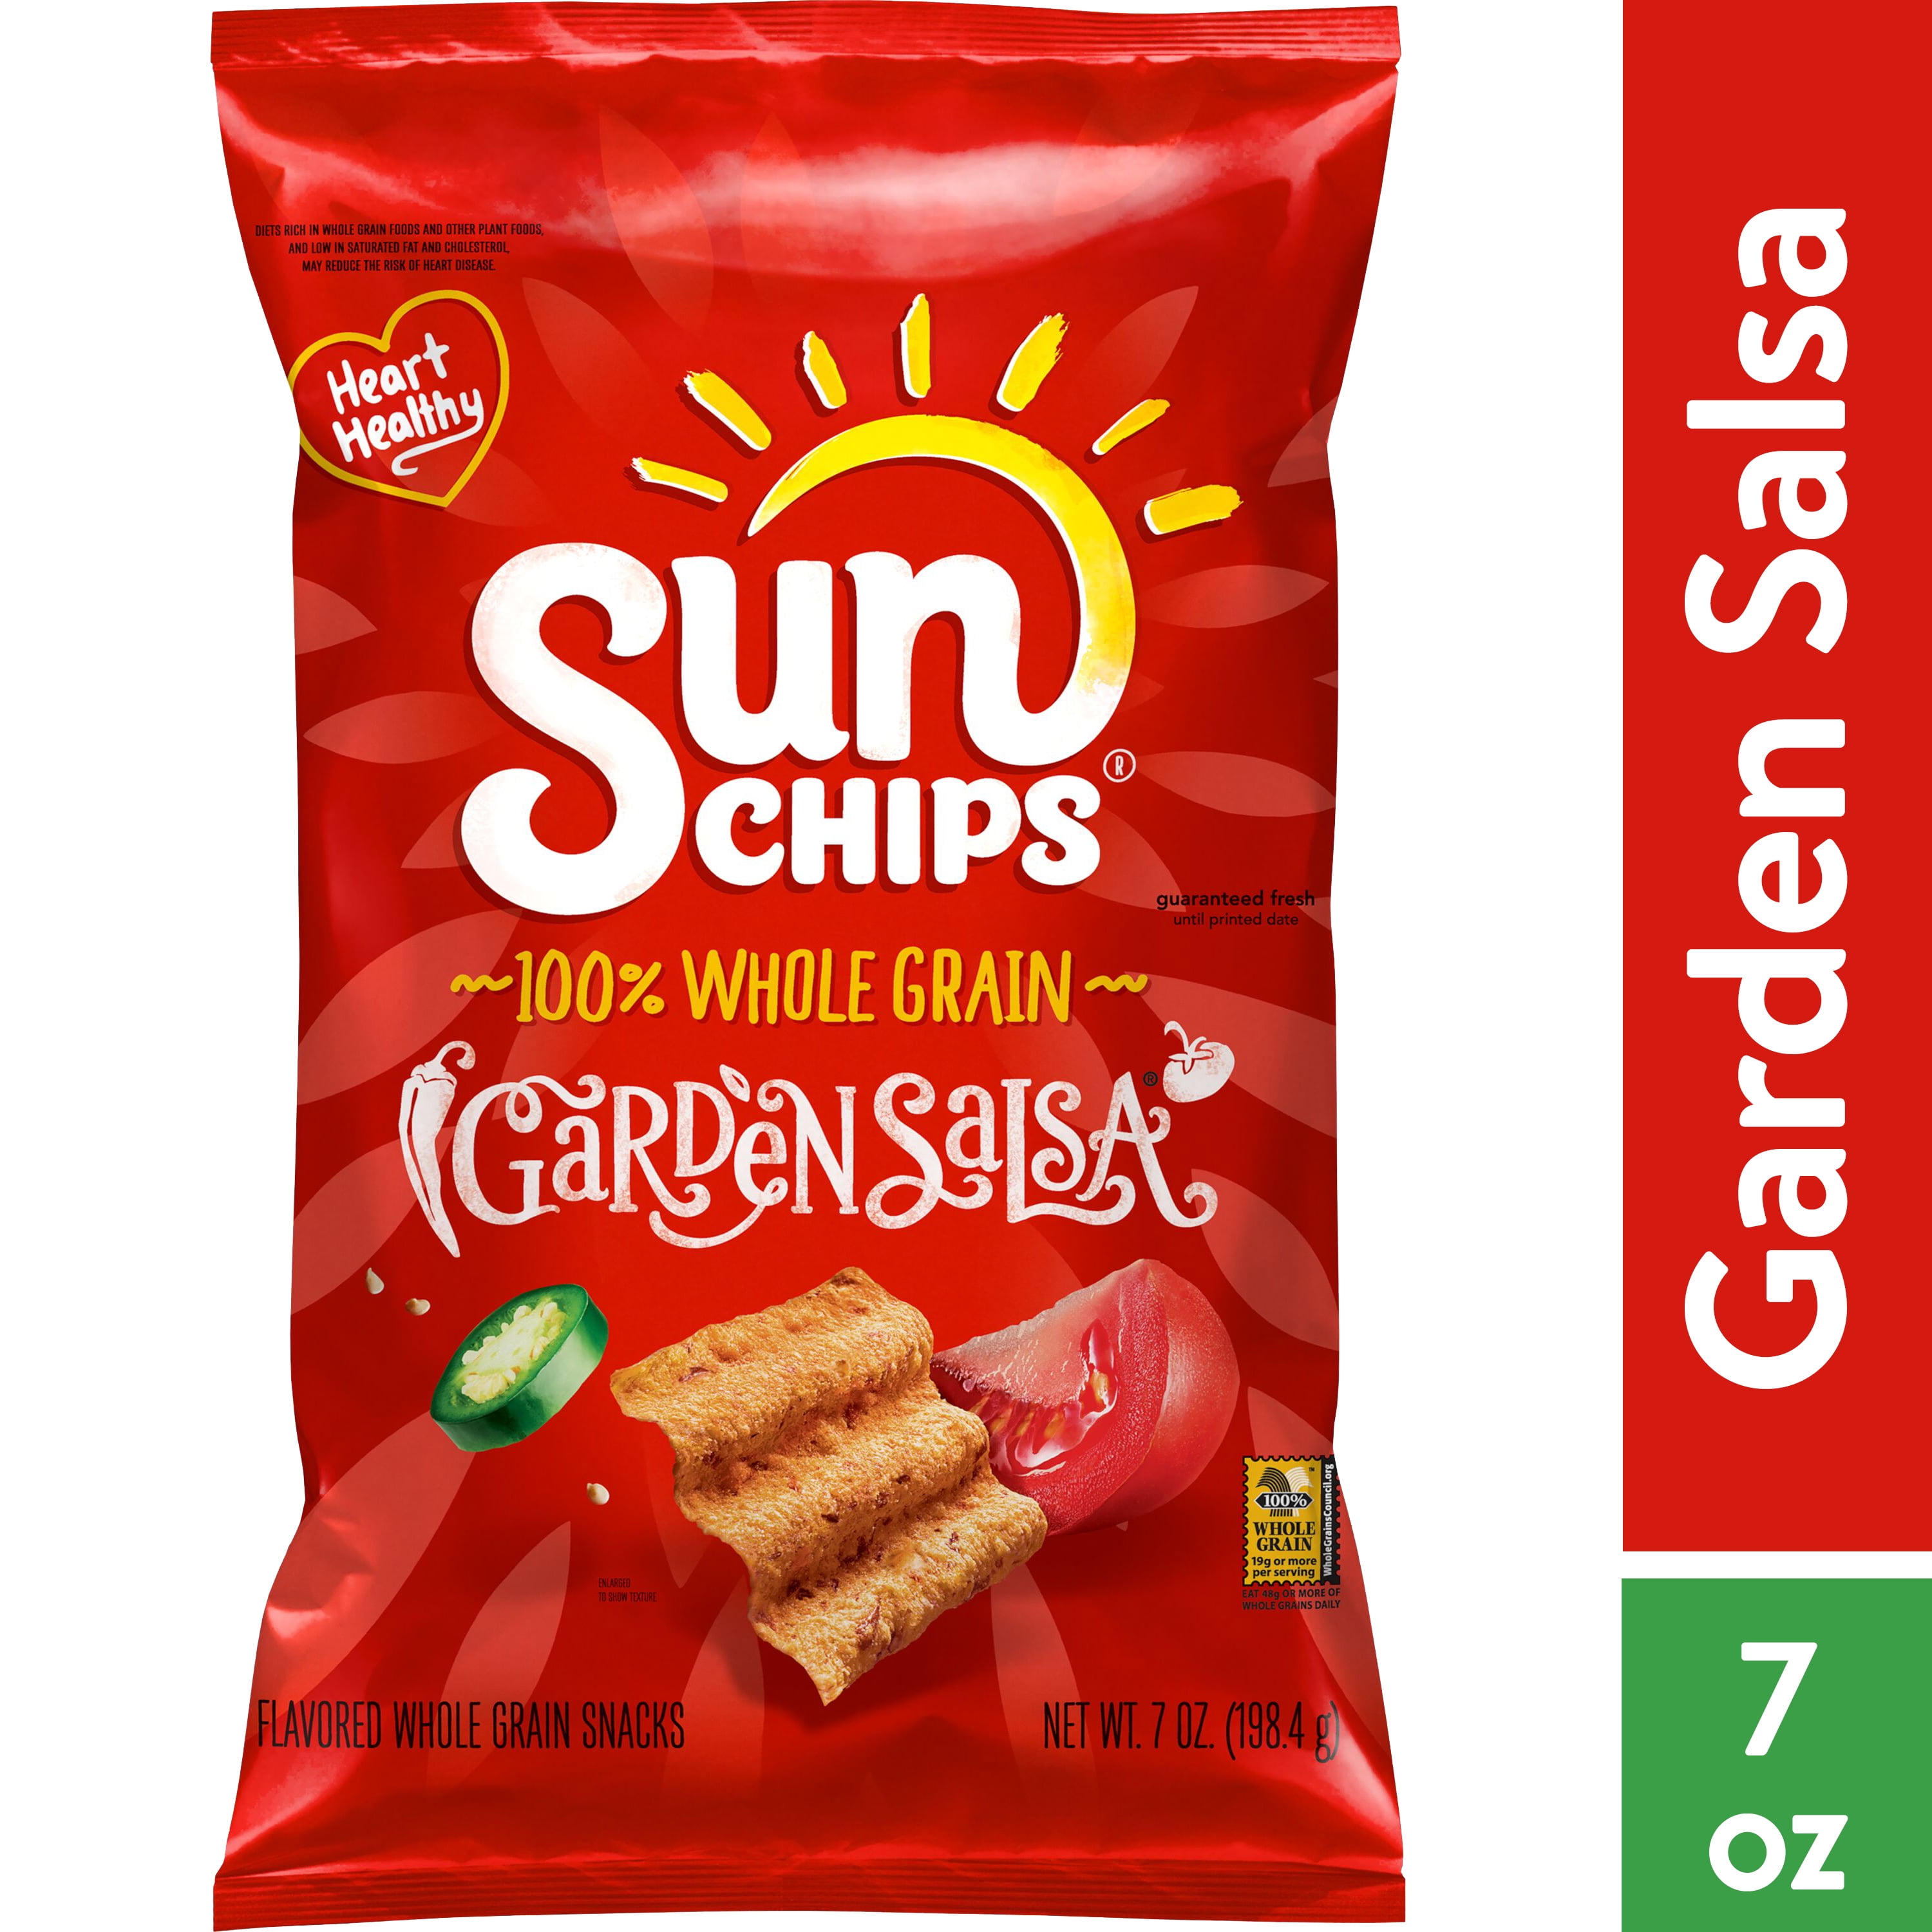 SunChips Garden Salsa Flavored Whole Grain Snacks, 7 oz Bag